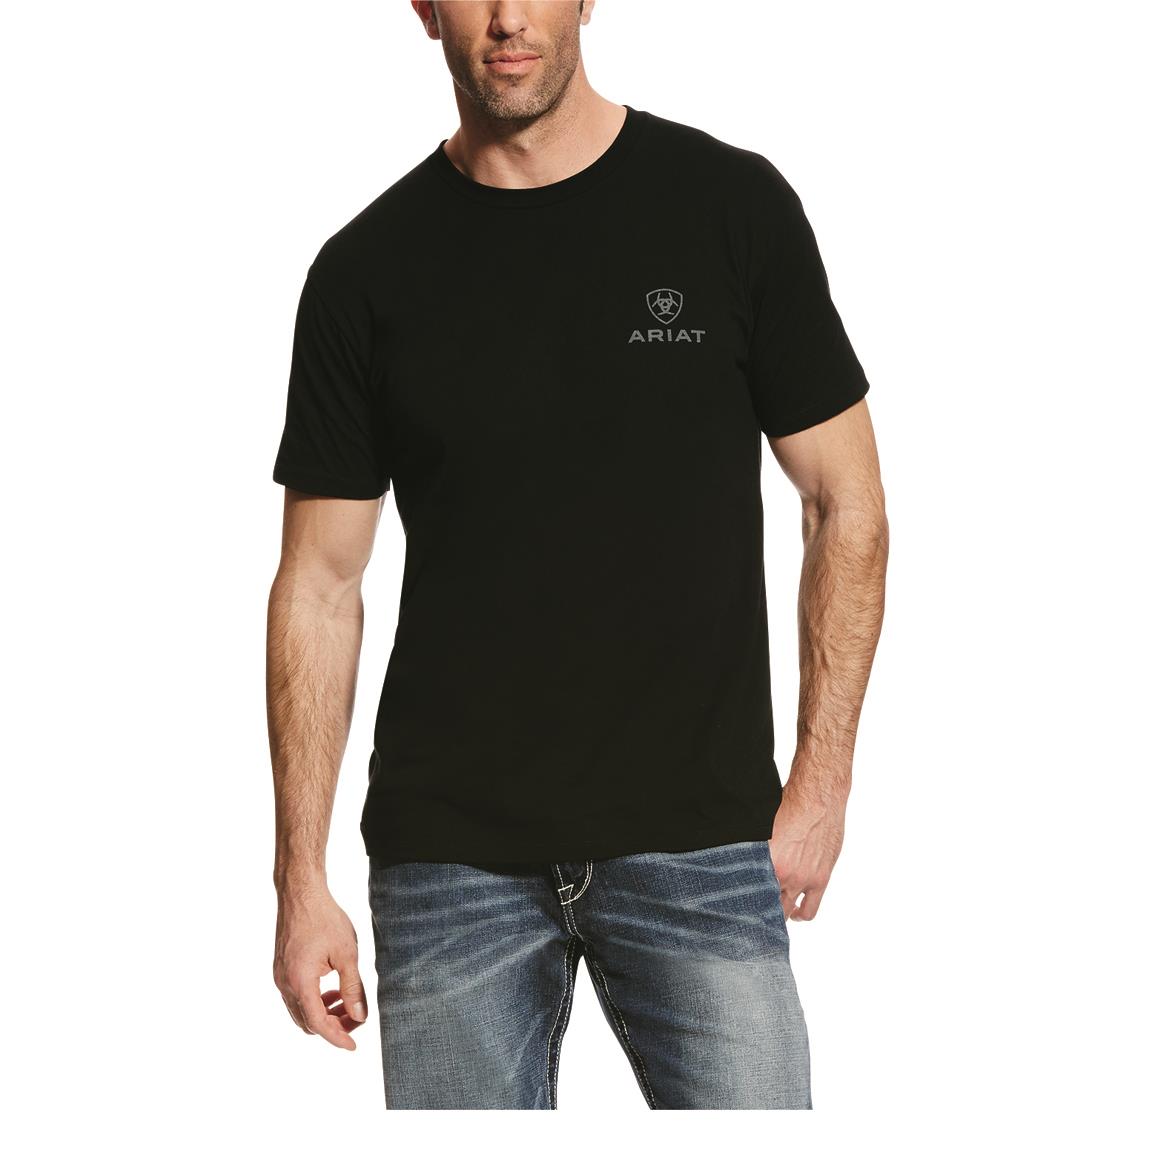 Ariat Men's Corporate Shirt, Black